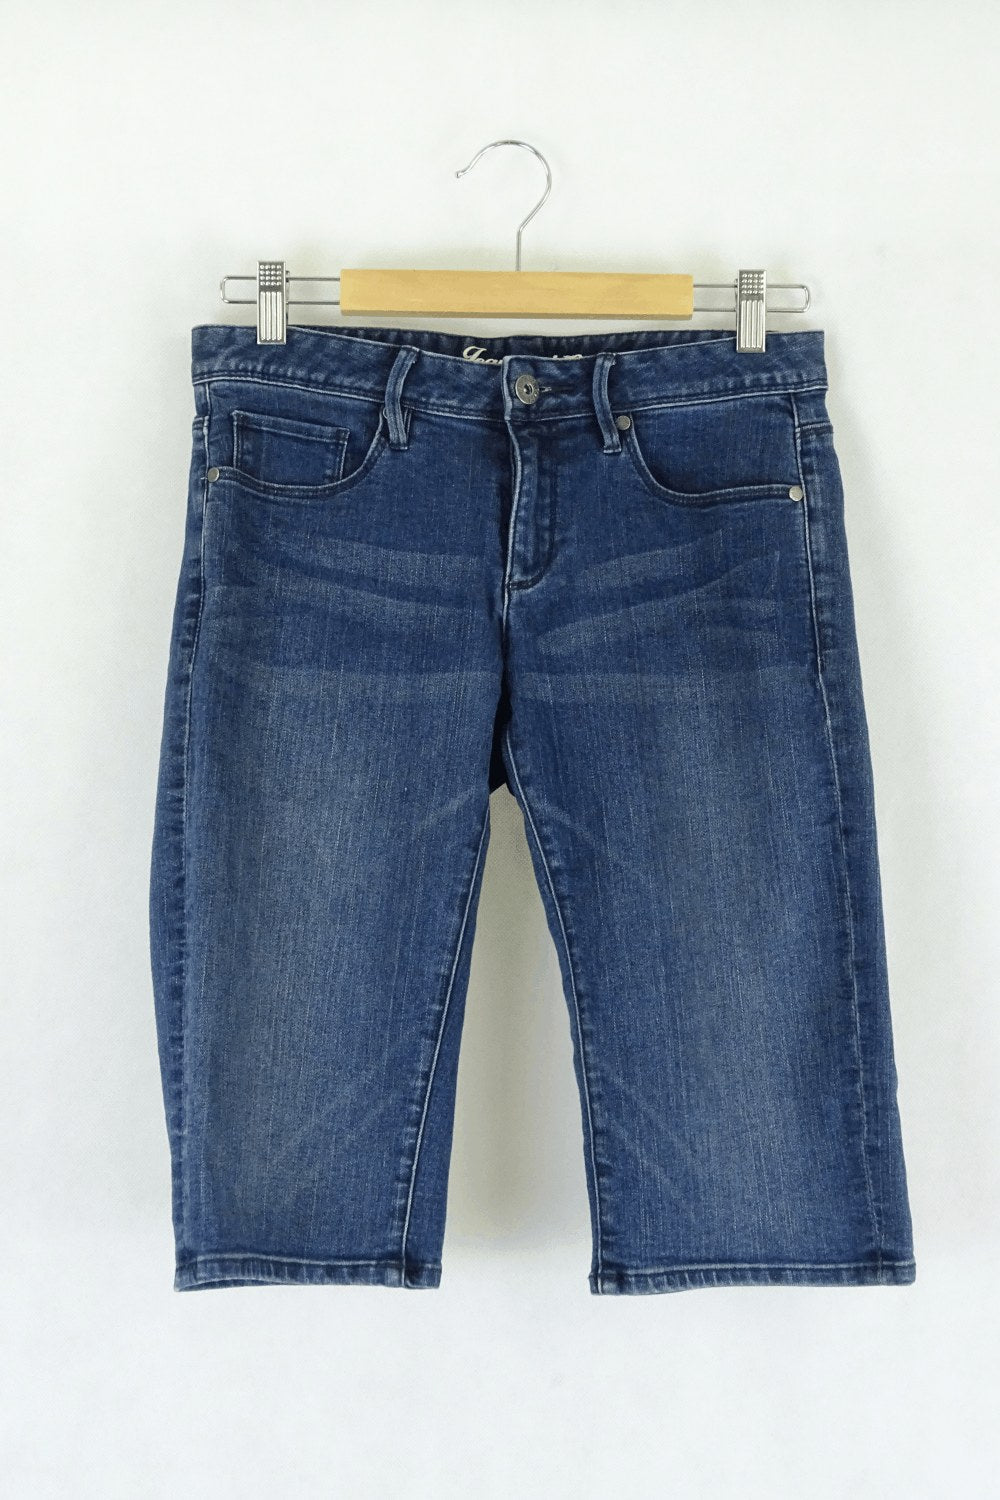 Jeanswest denim shorts 8